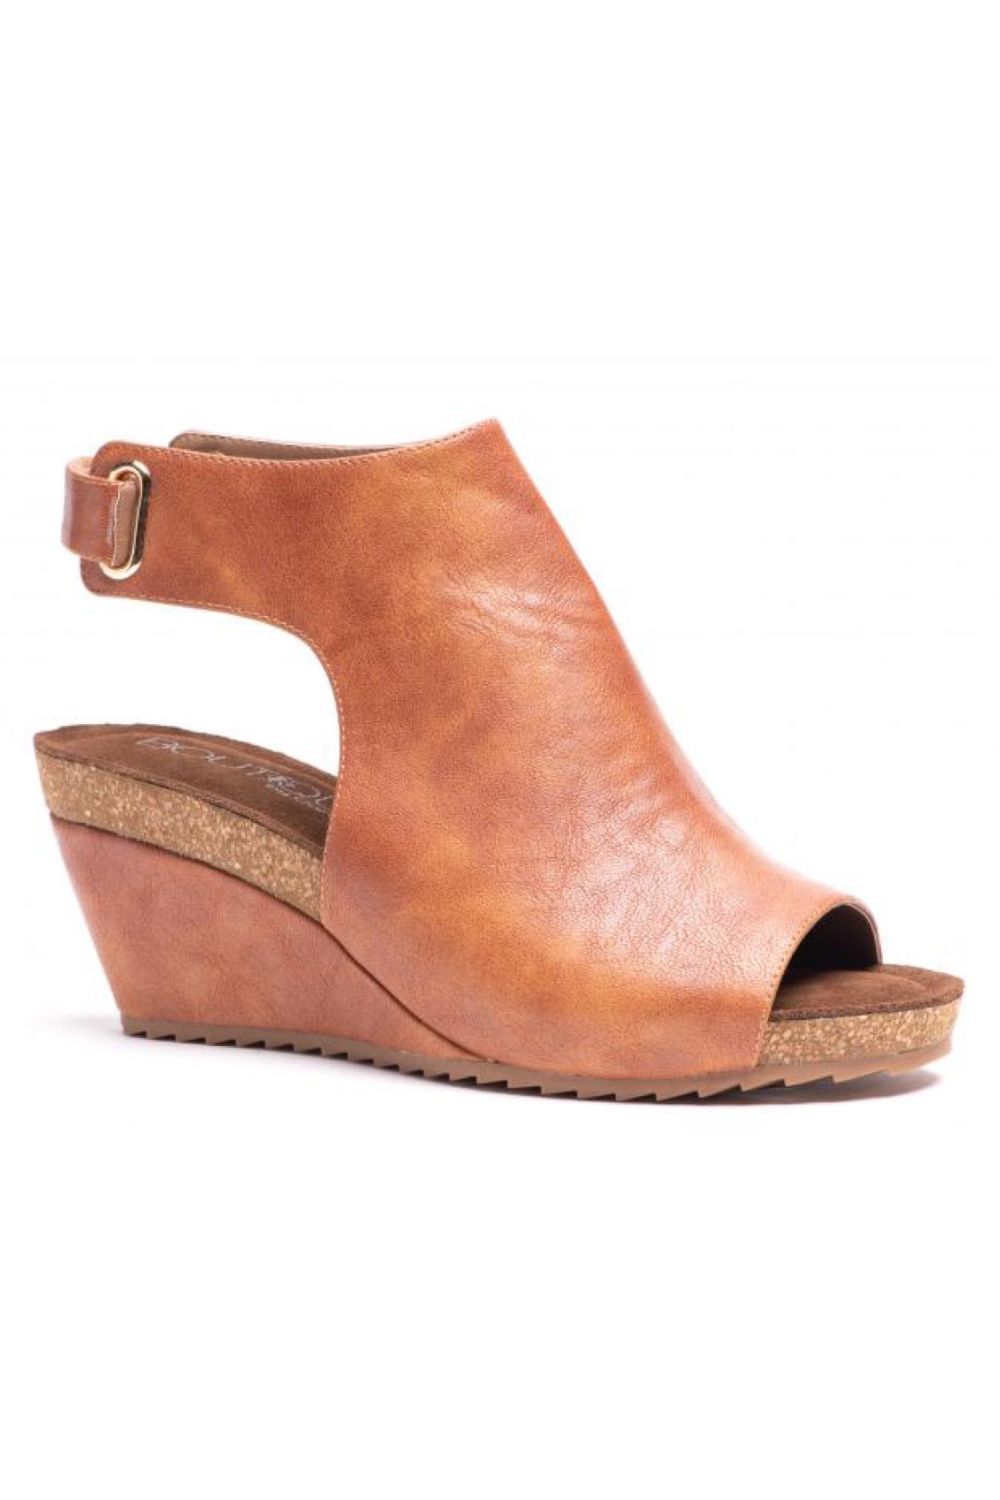 Brown Cognac Wedge Heel Sandal Shoe with Velcro Strap, Peep Toe, and Comfort Sole.